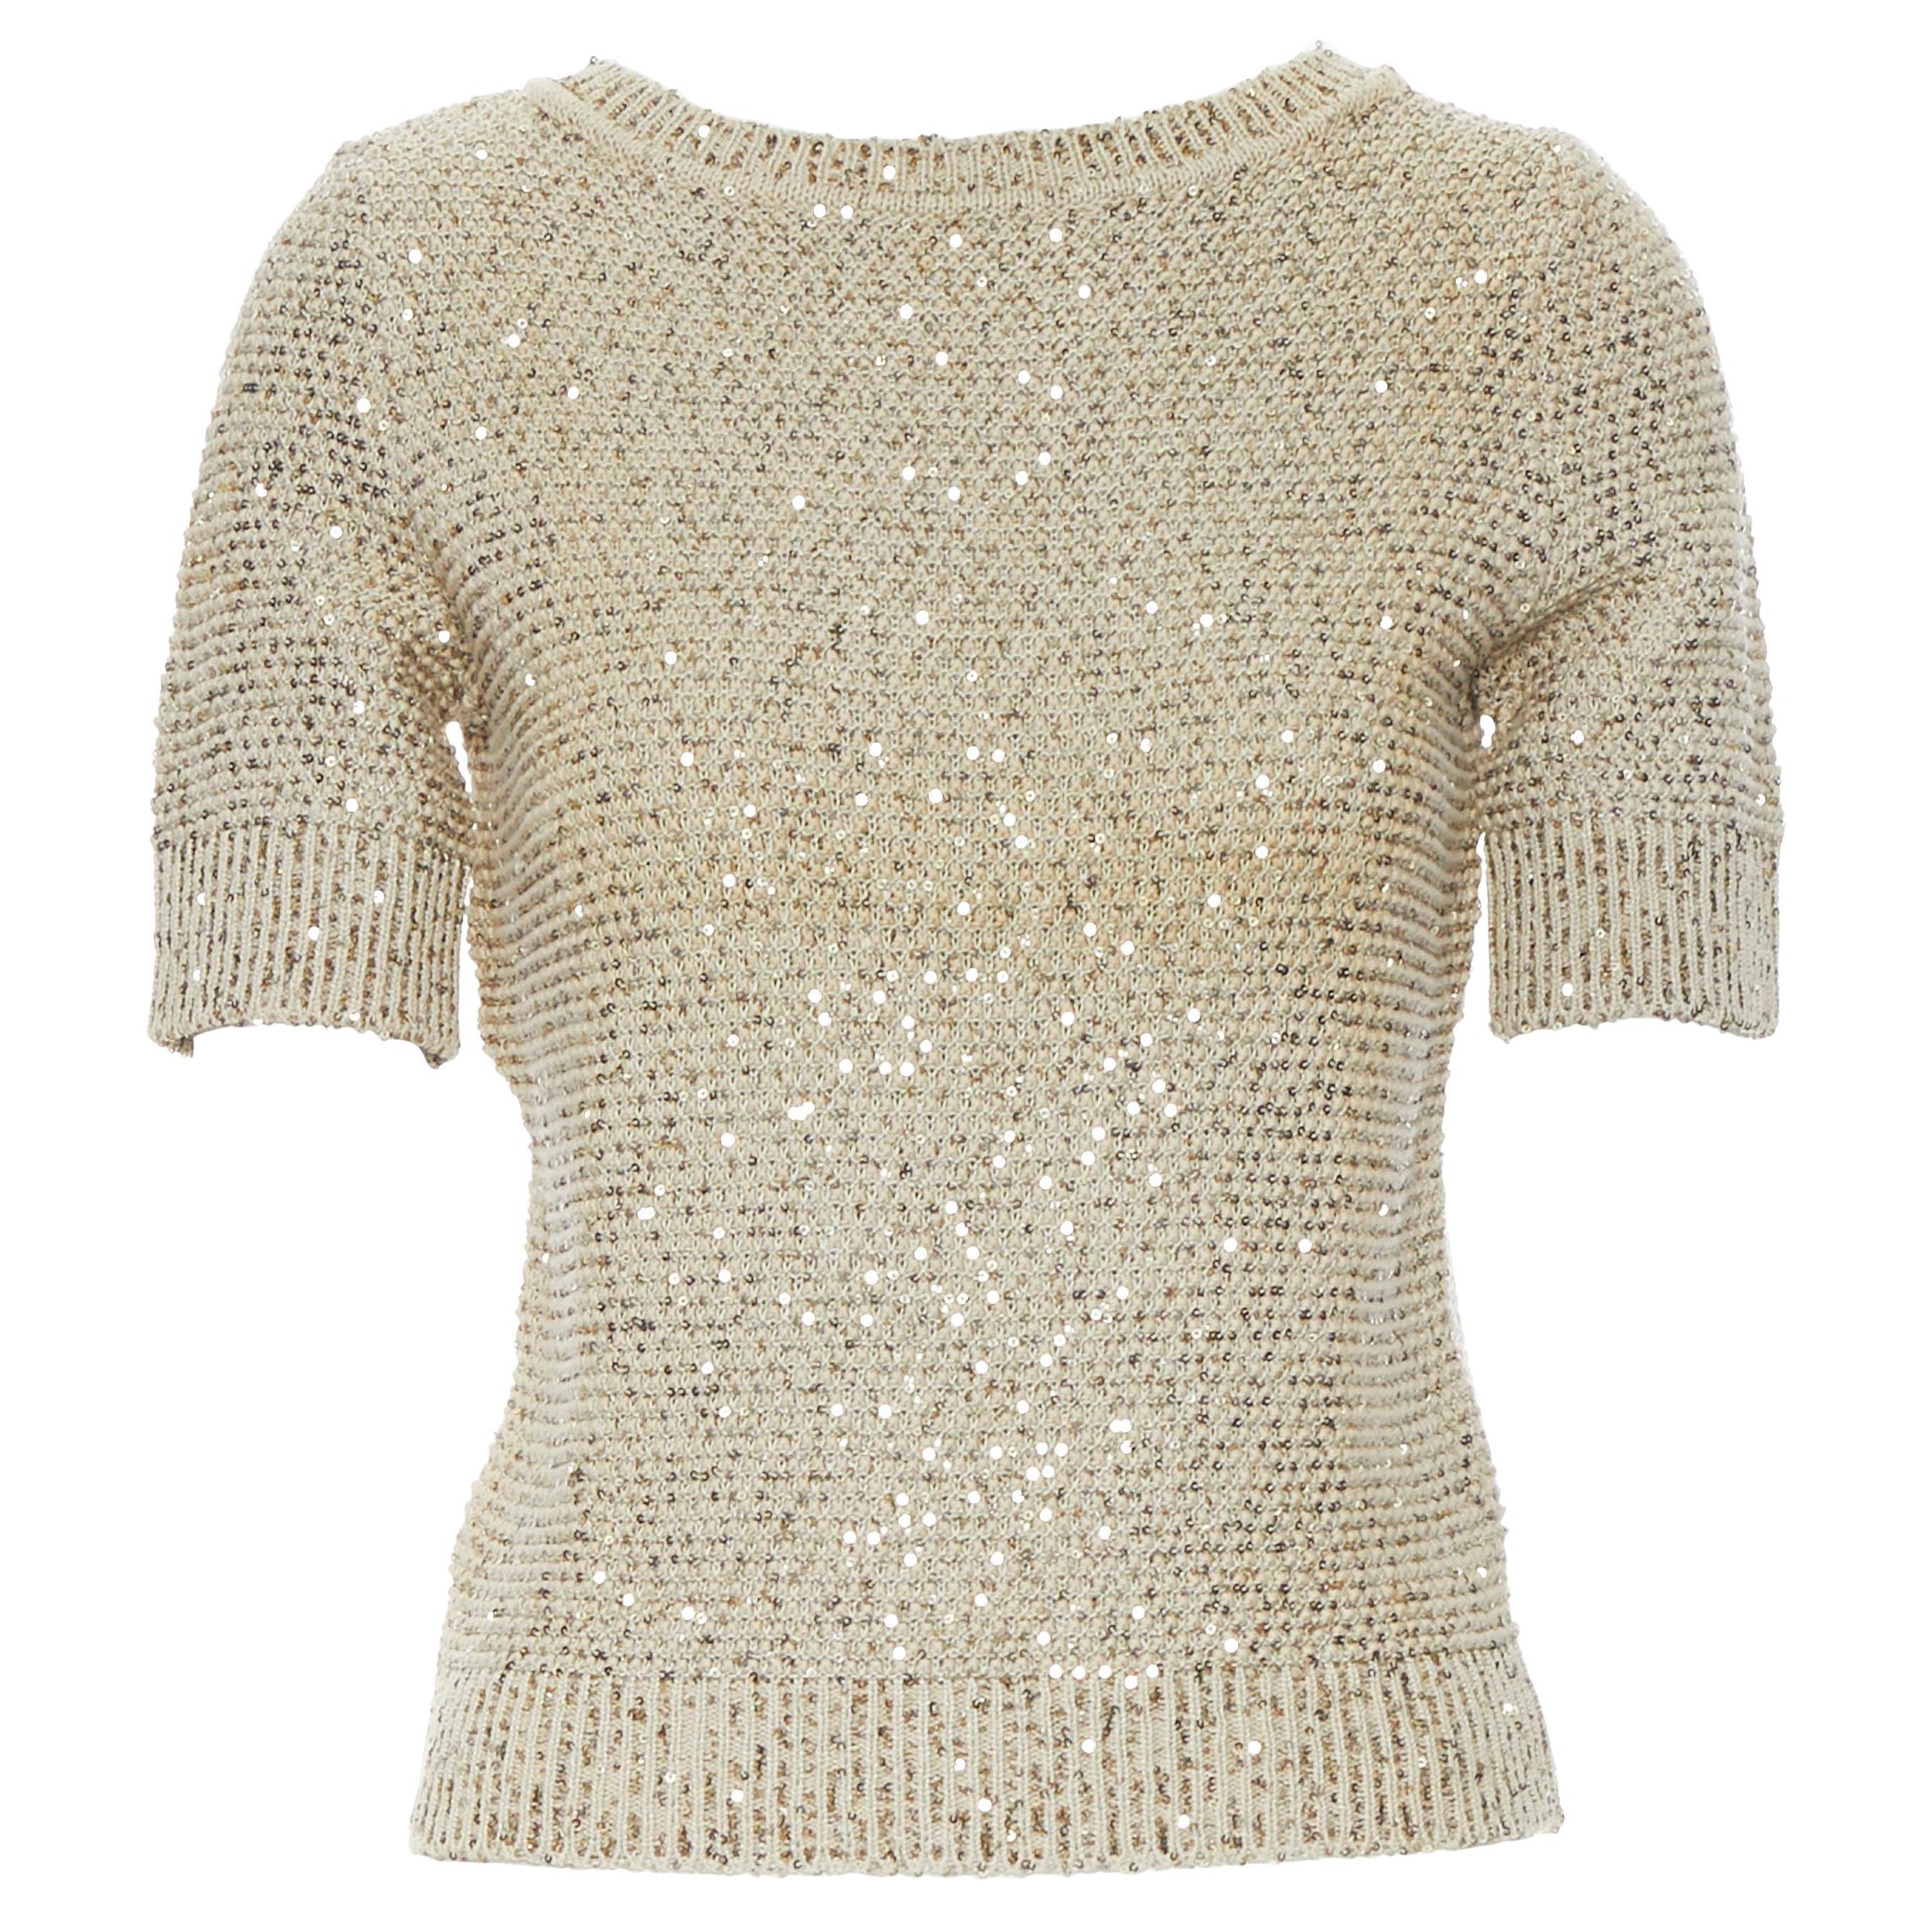 OSCAR DE LA RENTA R13 gold sequins silk cotton short sleeve sweater top XS